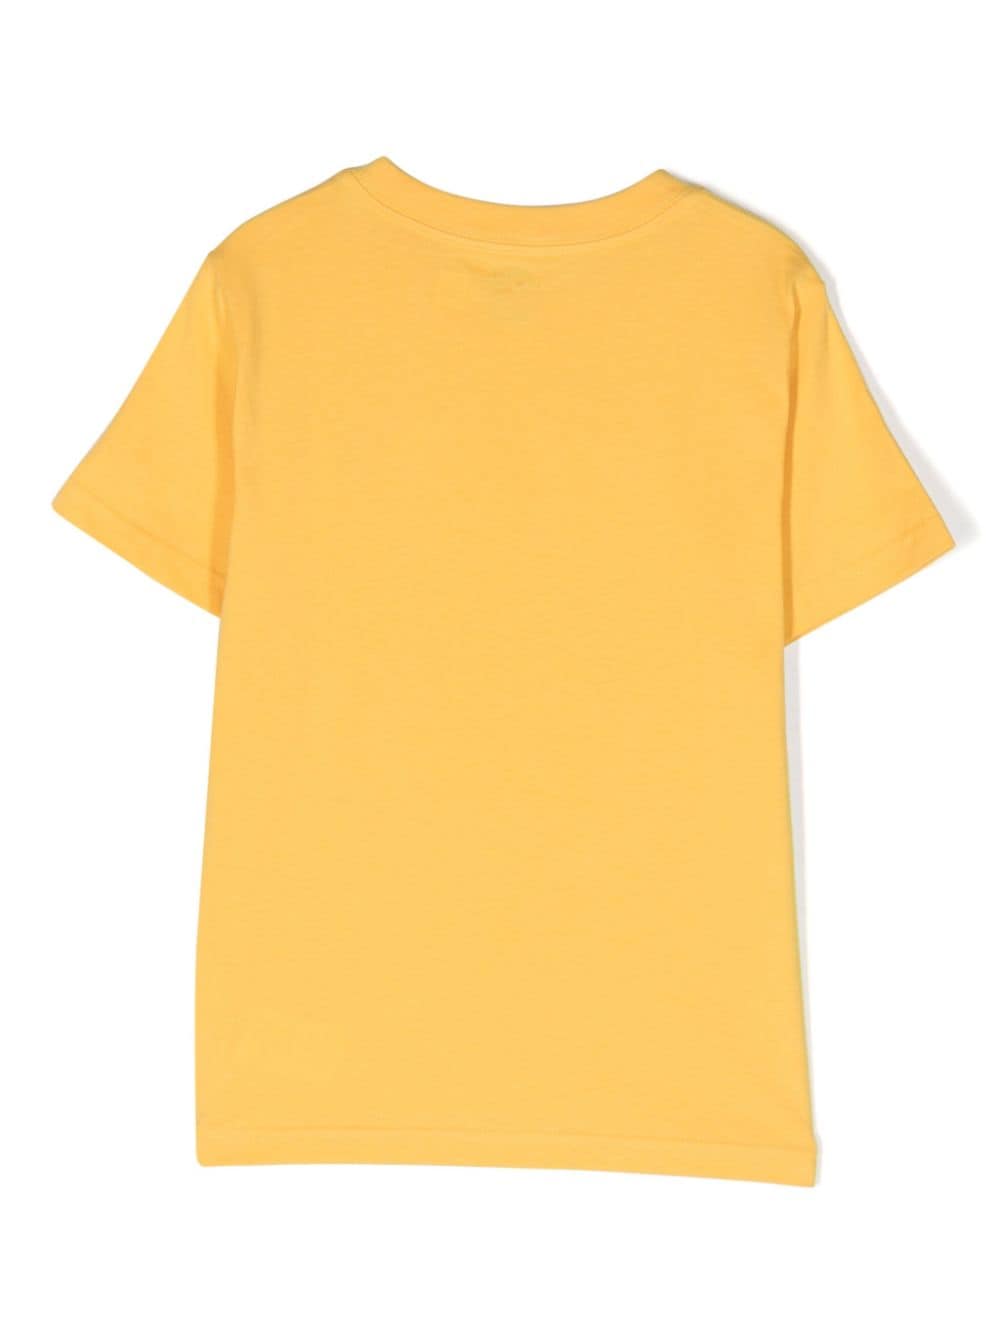 T-shirt jaune enfant